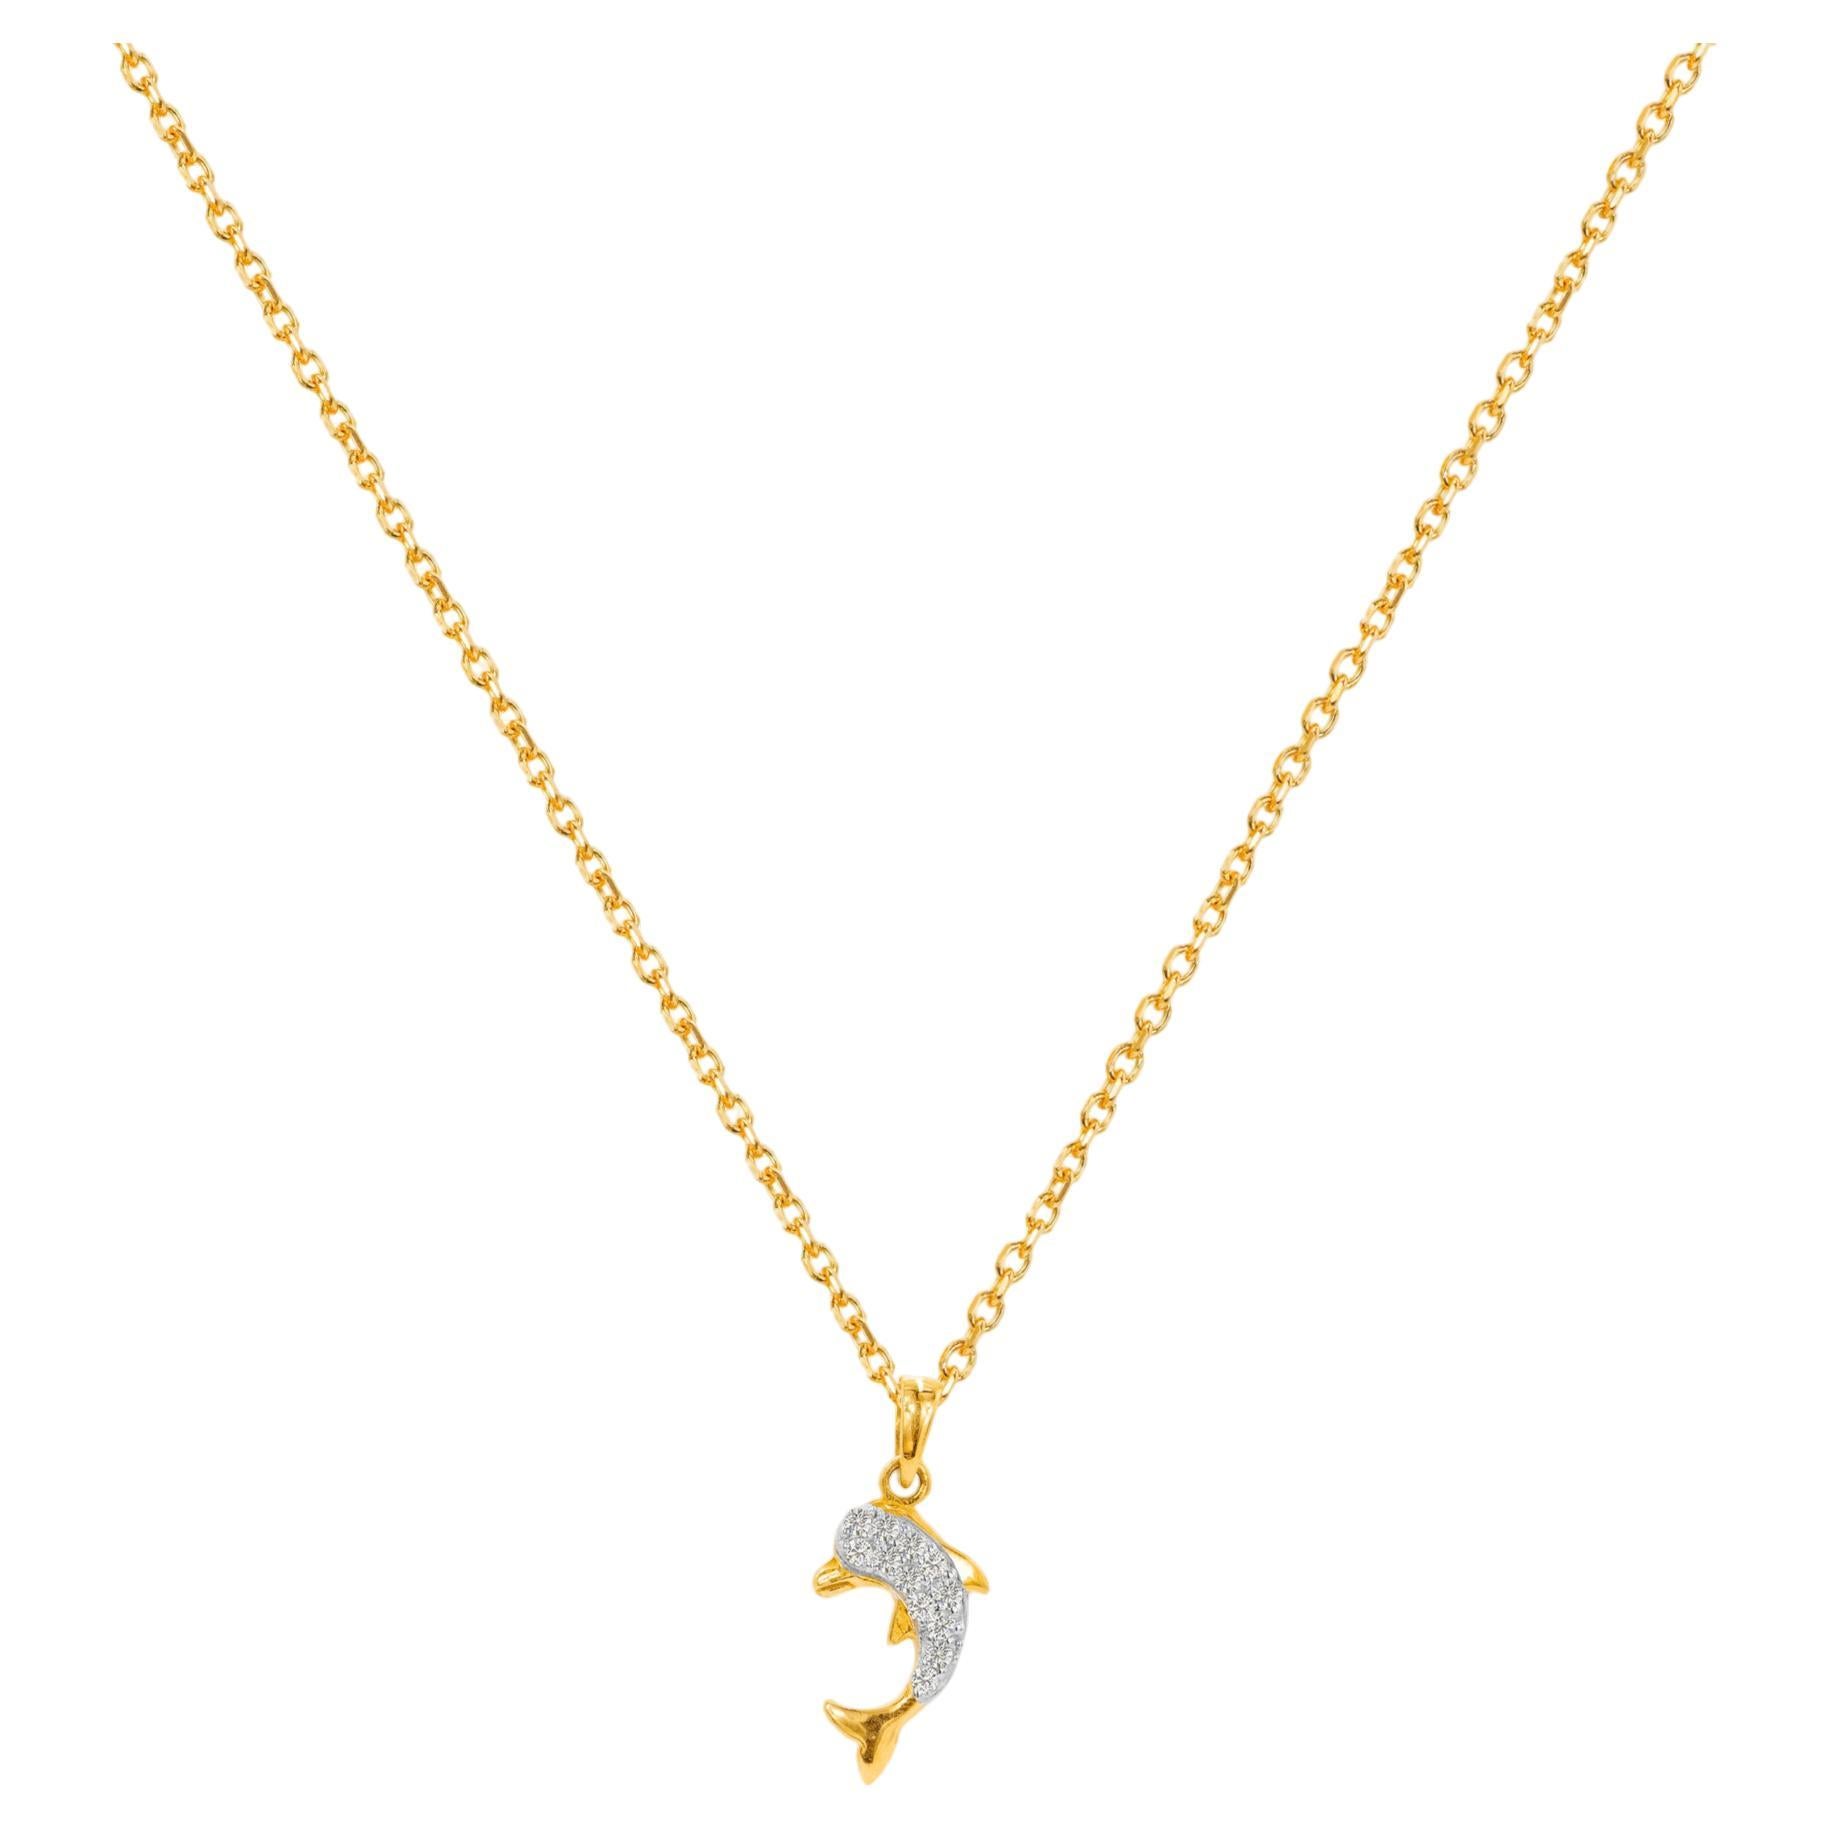 Collier de dauphins en or 18 carats avec diamants et breloque « Sea Life » en forme de dauphin